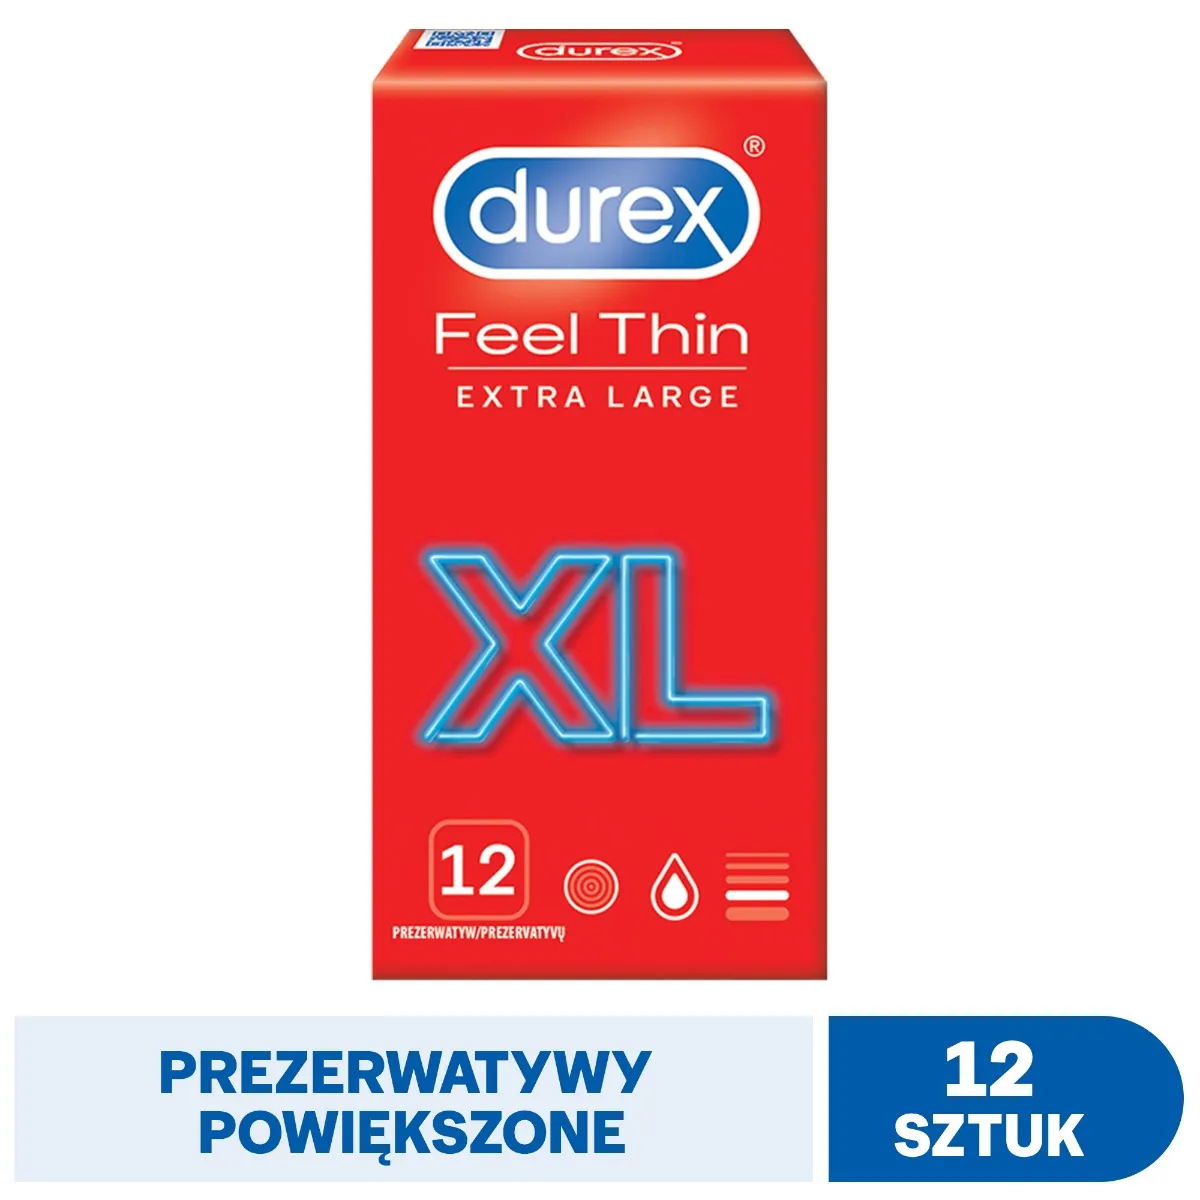 Durex Feel Thin XL prezerwatywy, 12 szt.